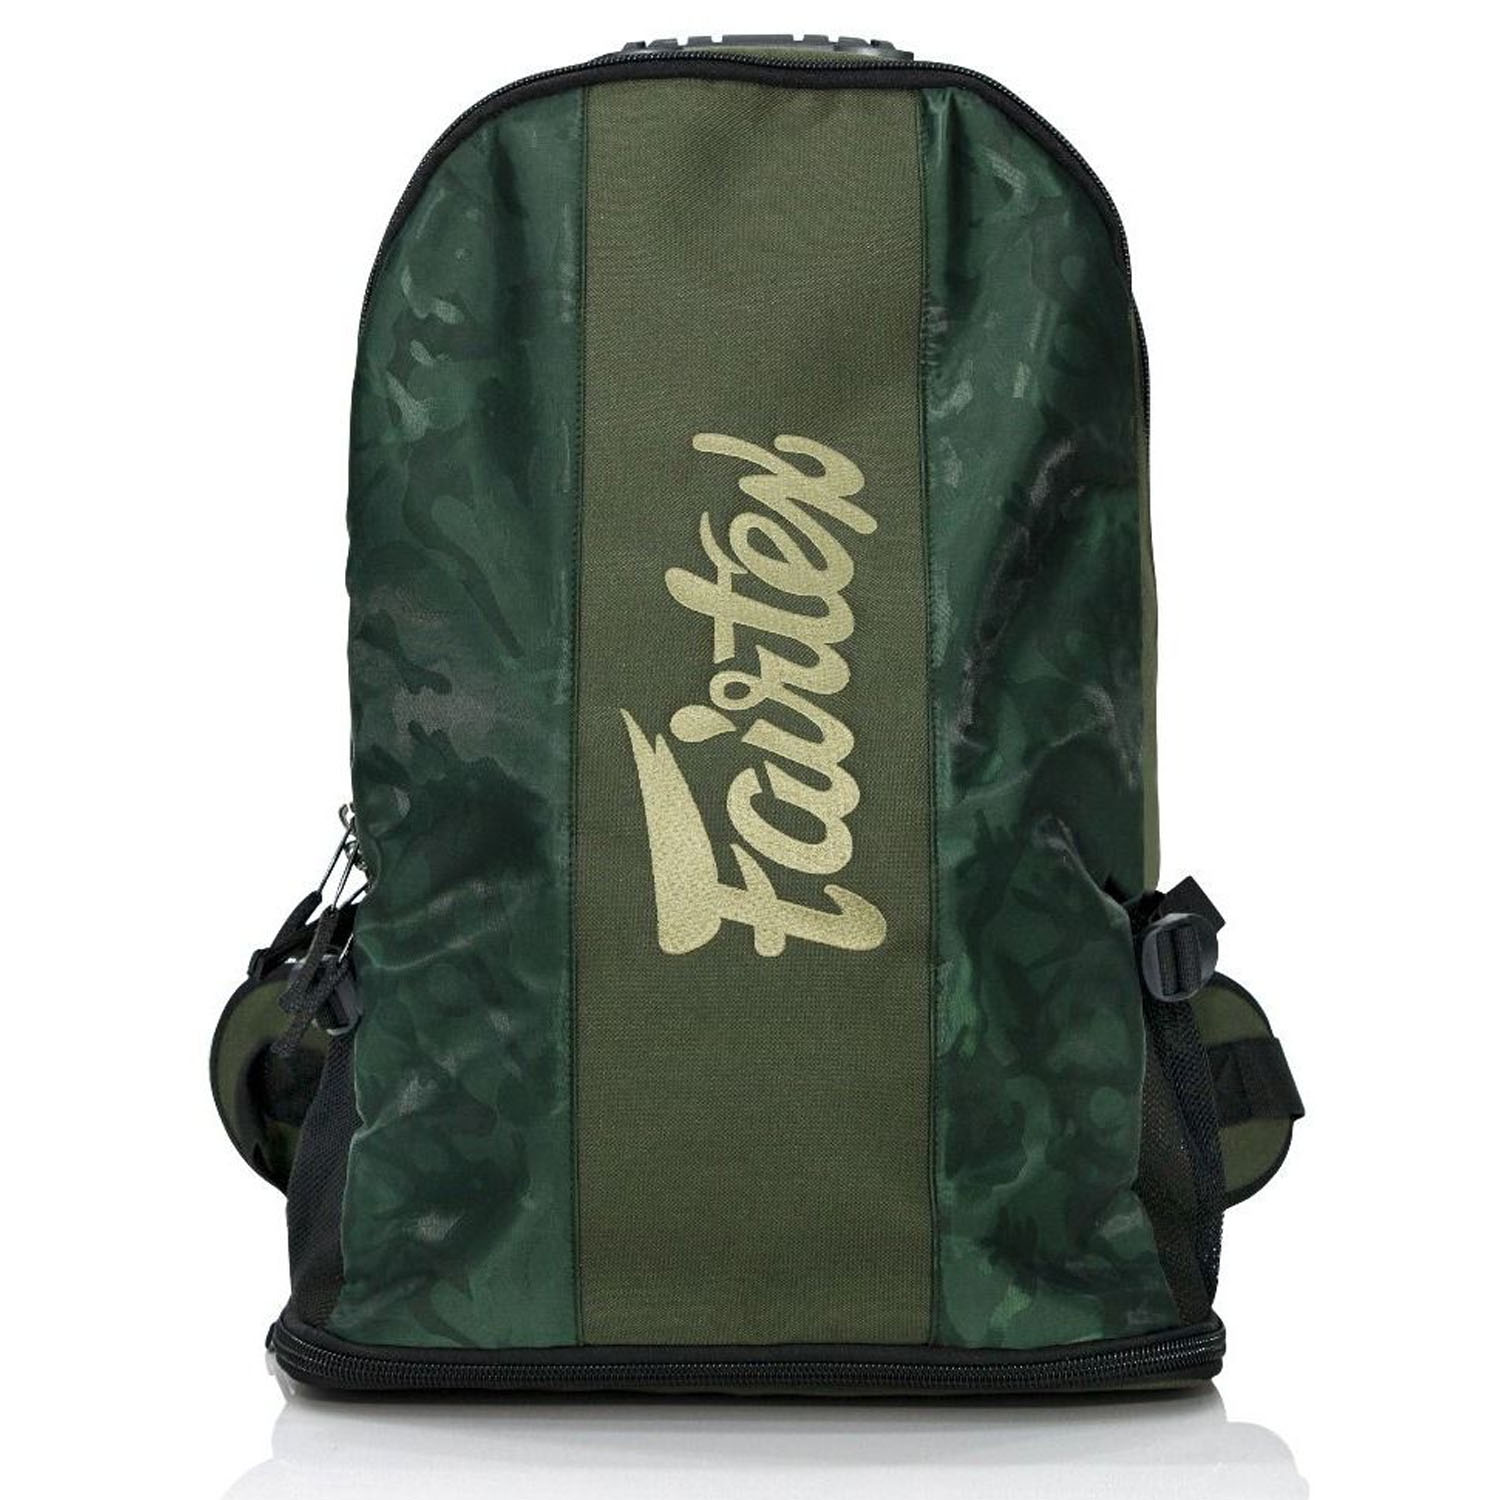 Fairtex Backpack, BAG4, green